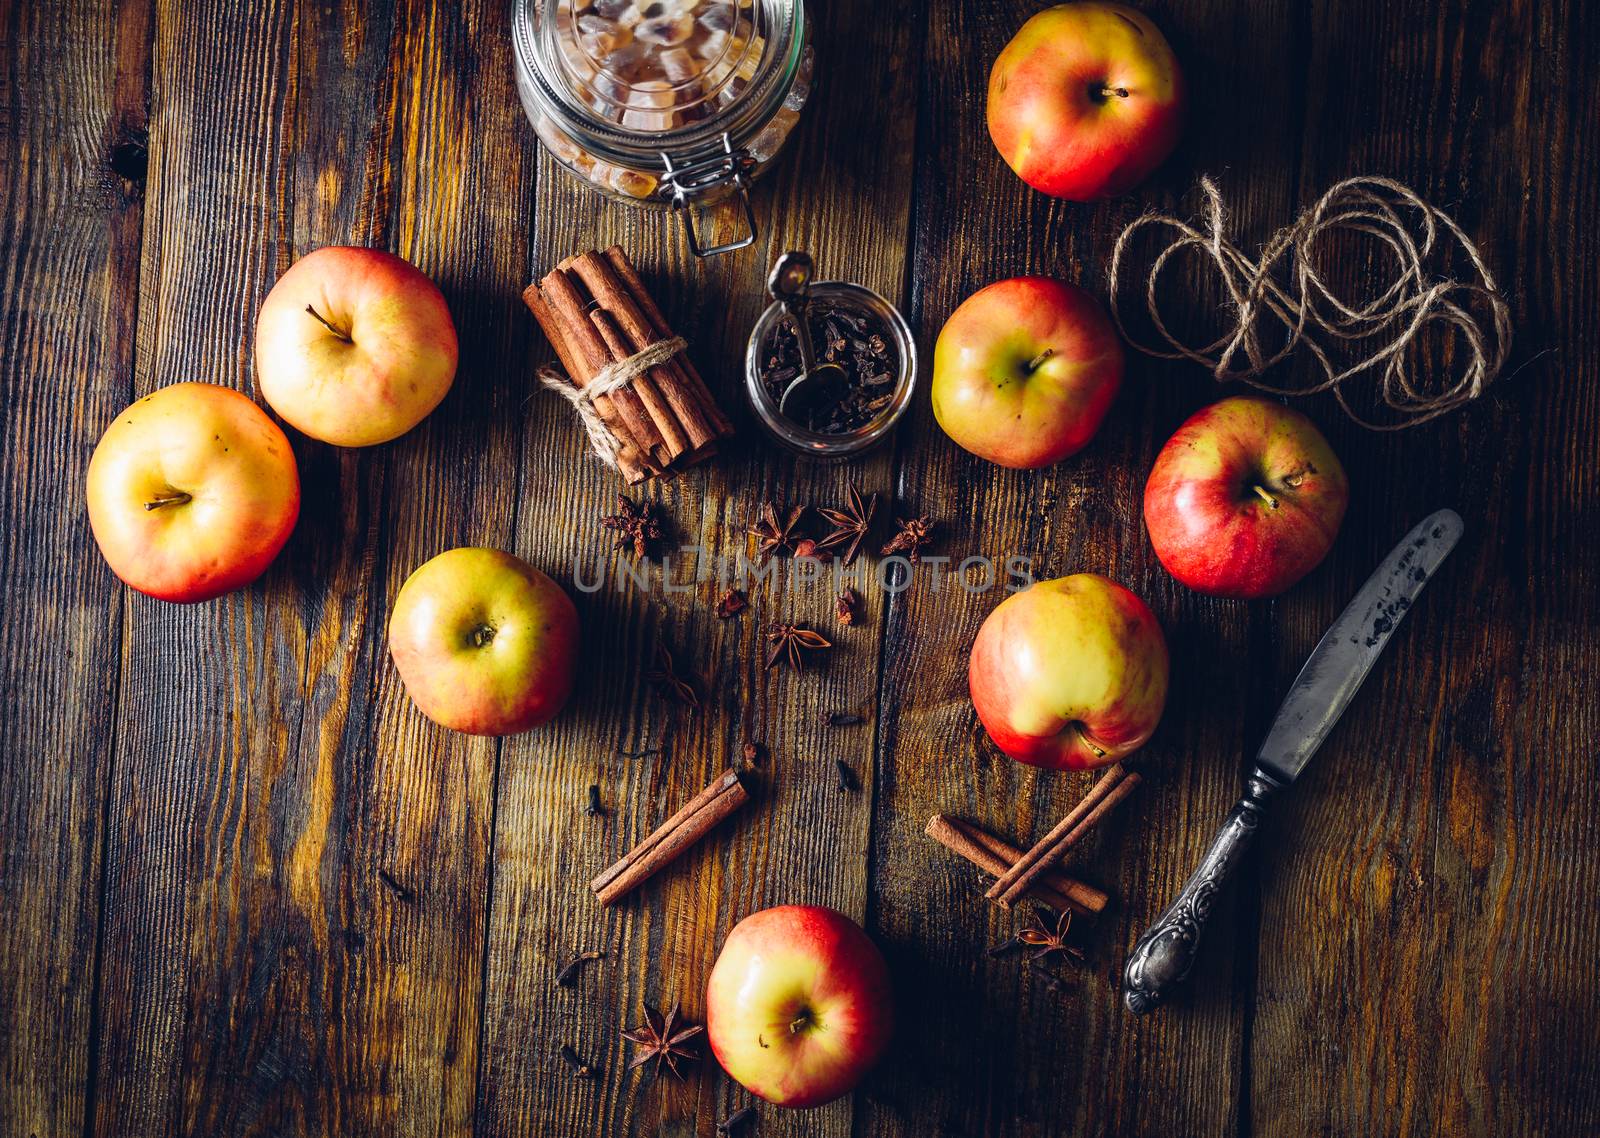 Apples with Clove, Cinnamon, Anise Star and Sugar. by Seva_blsv